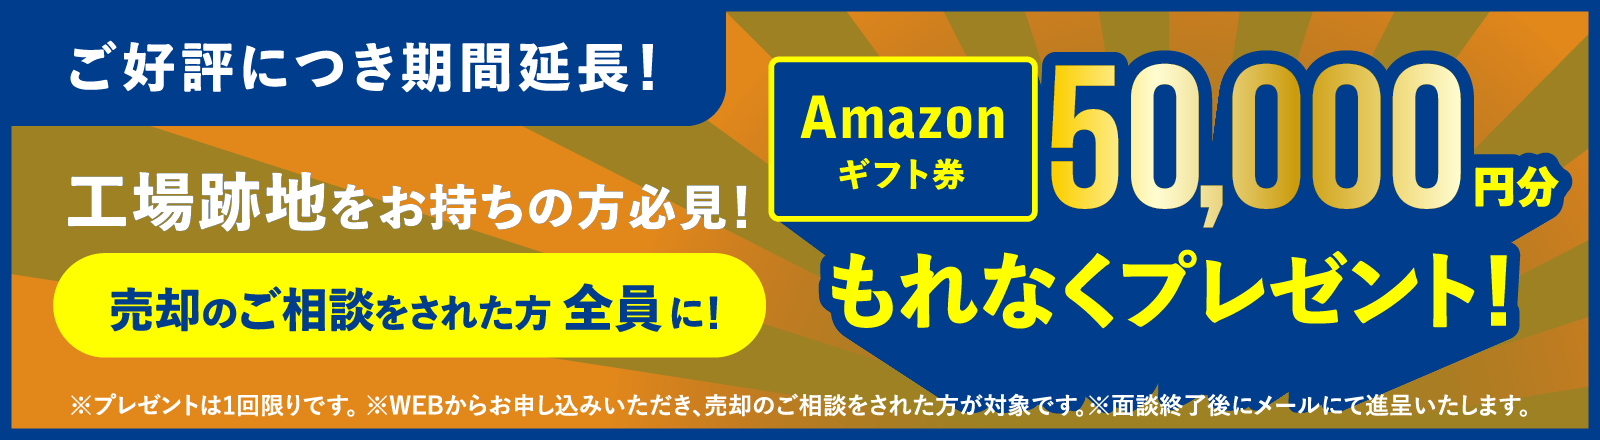 Amazonギフト券10,000円分プレゼントキャンペーン